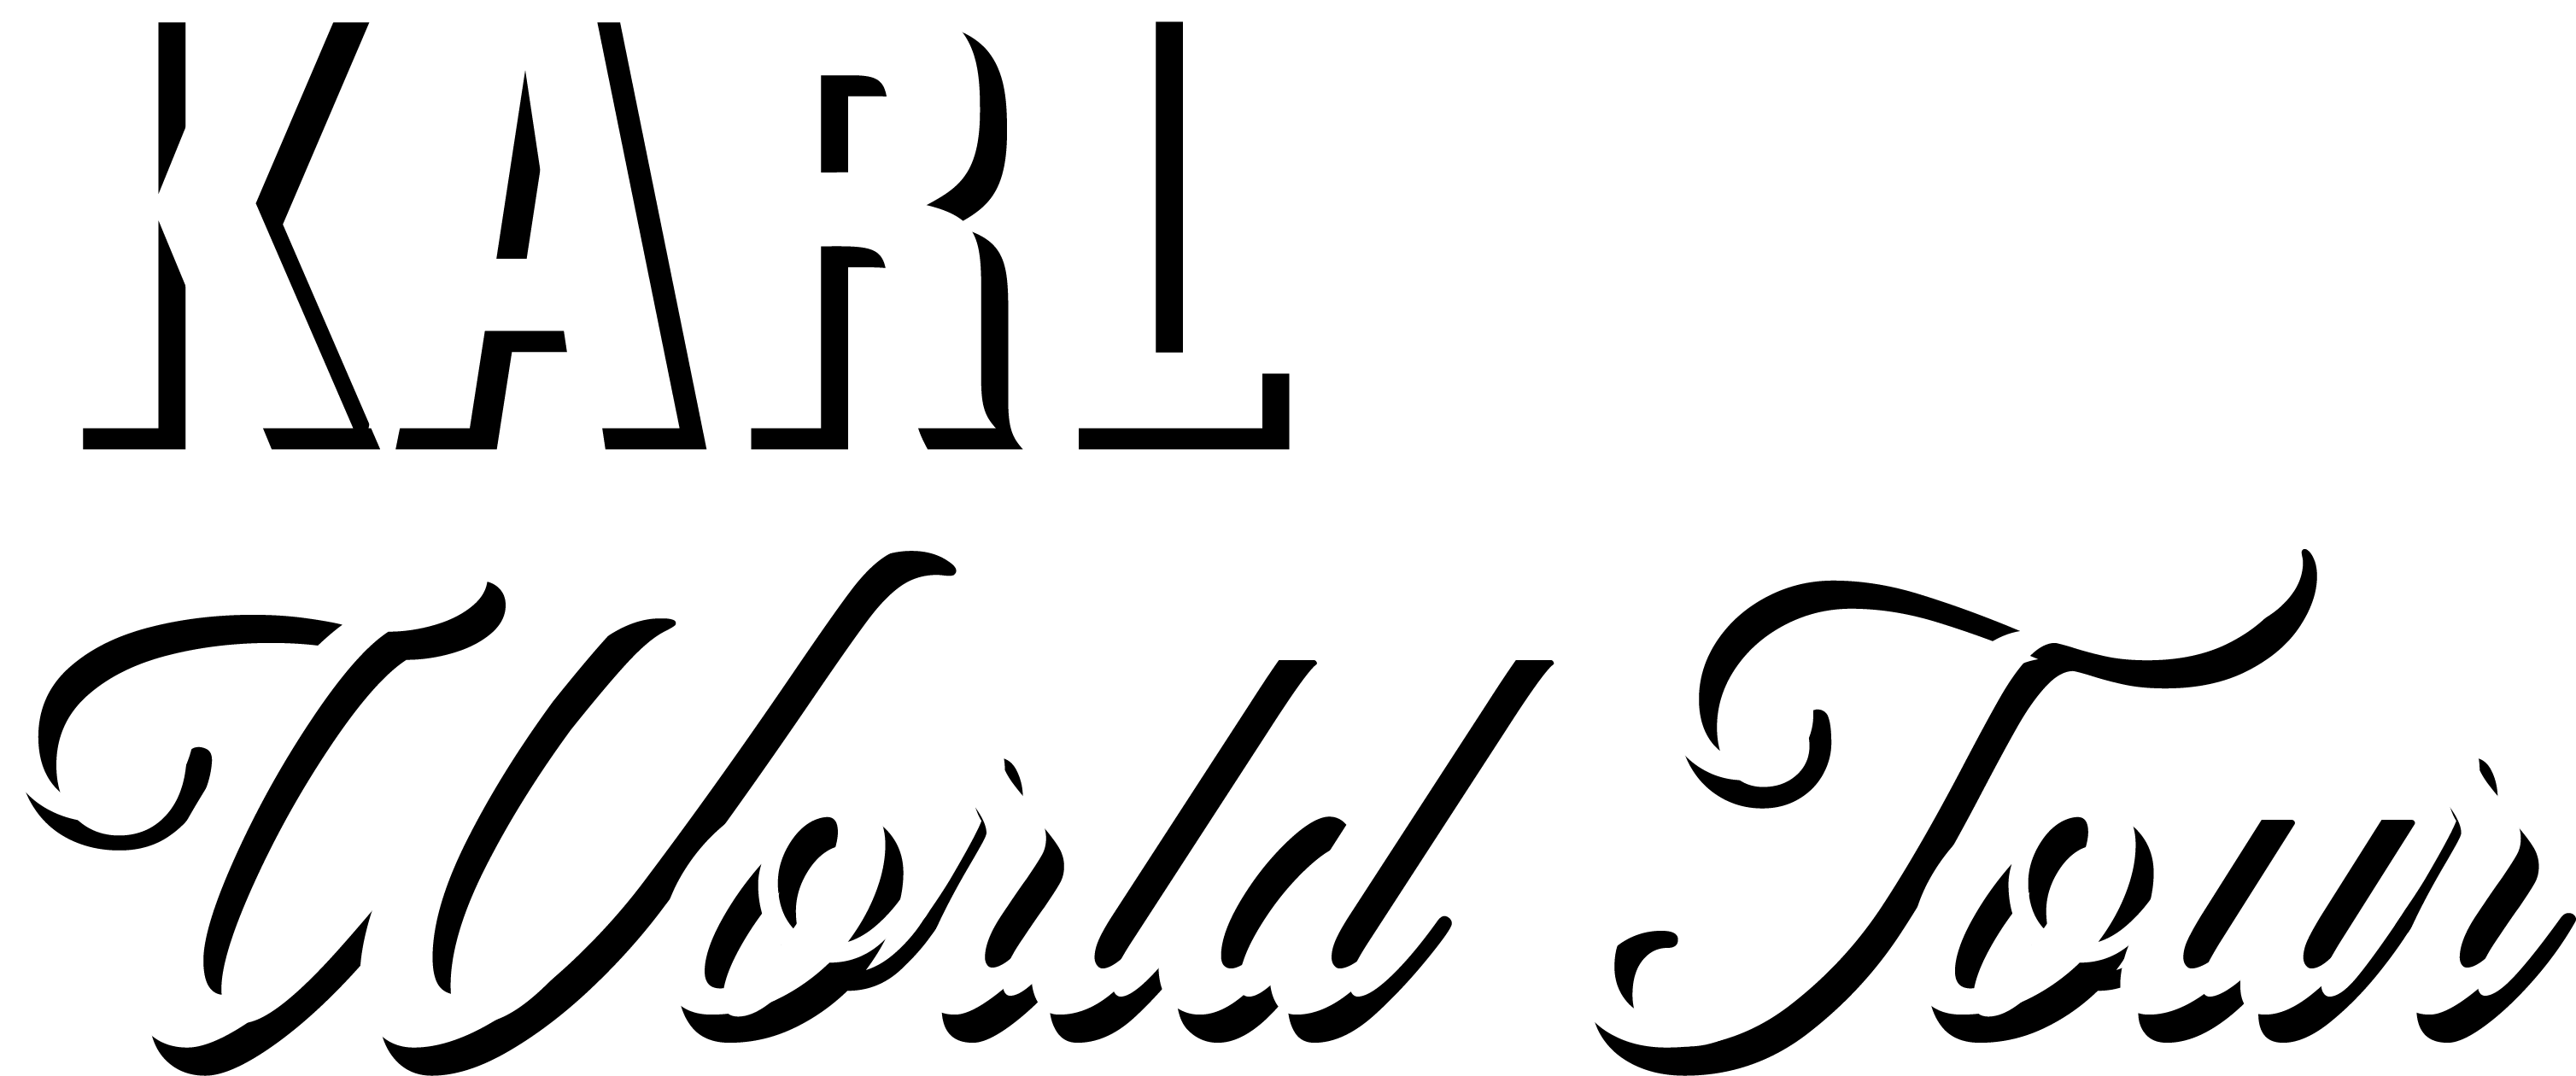 Karl world tour